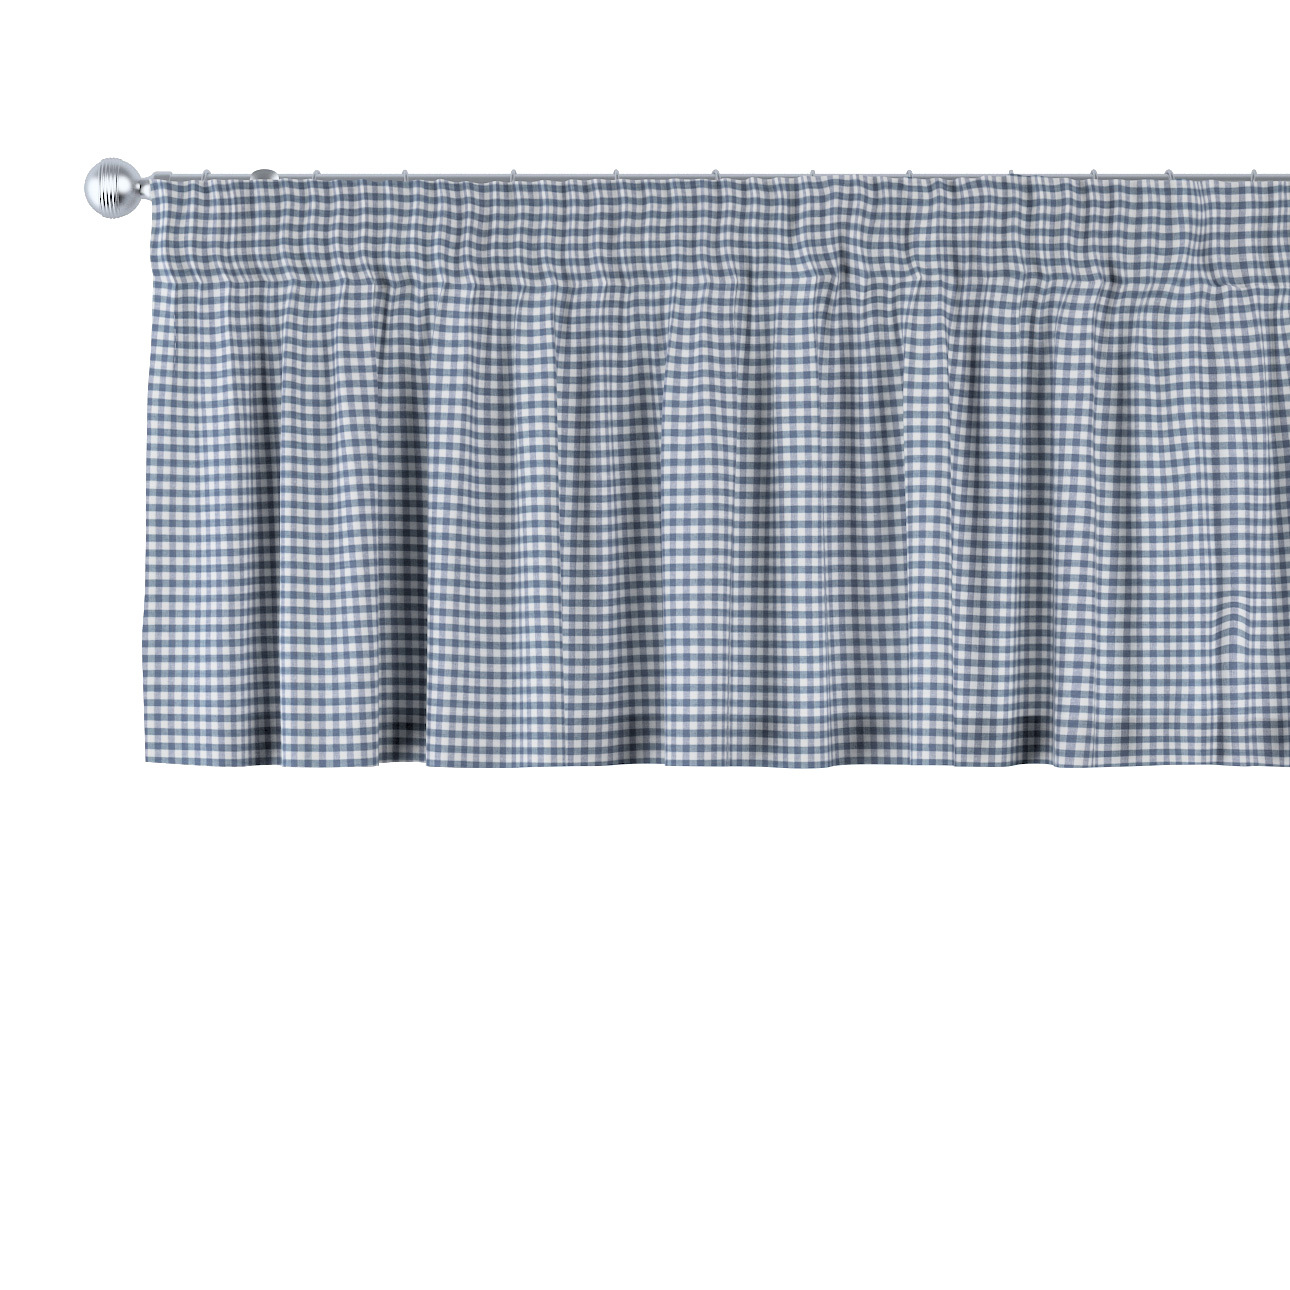 Kurzgardine mit Kräuselband, marinenblau-ecru , 390 x 40 cm, Quadro (136-00 günstig online kaufen